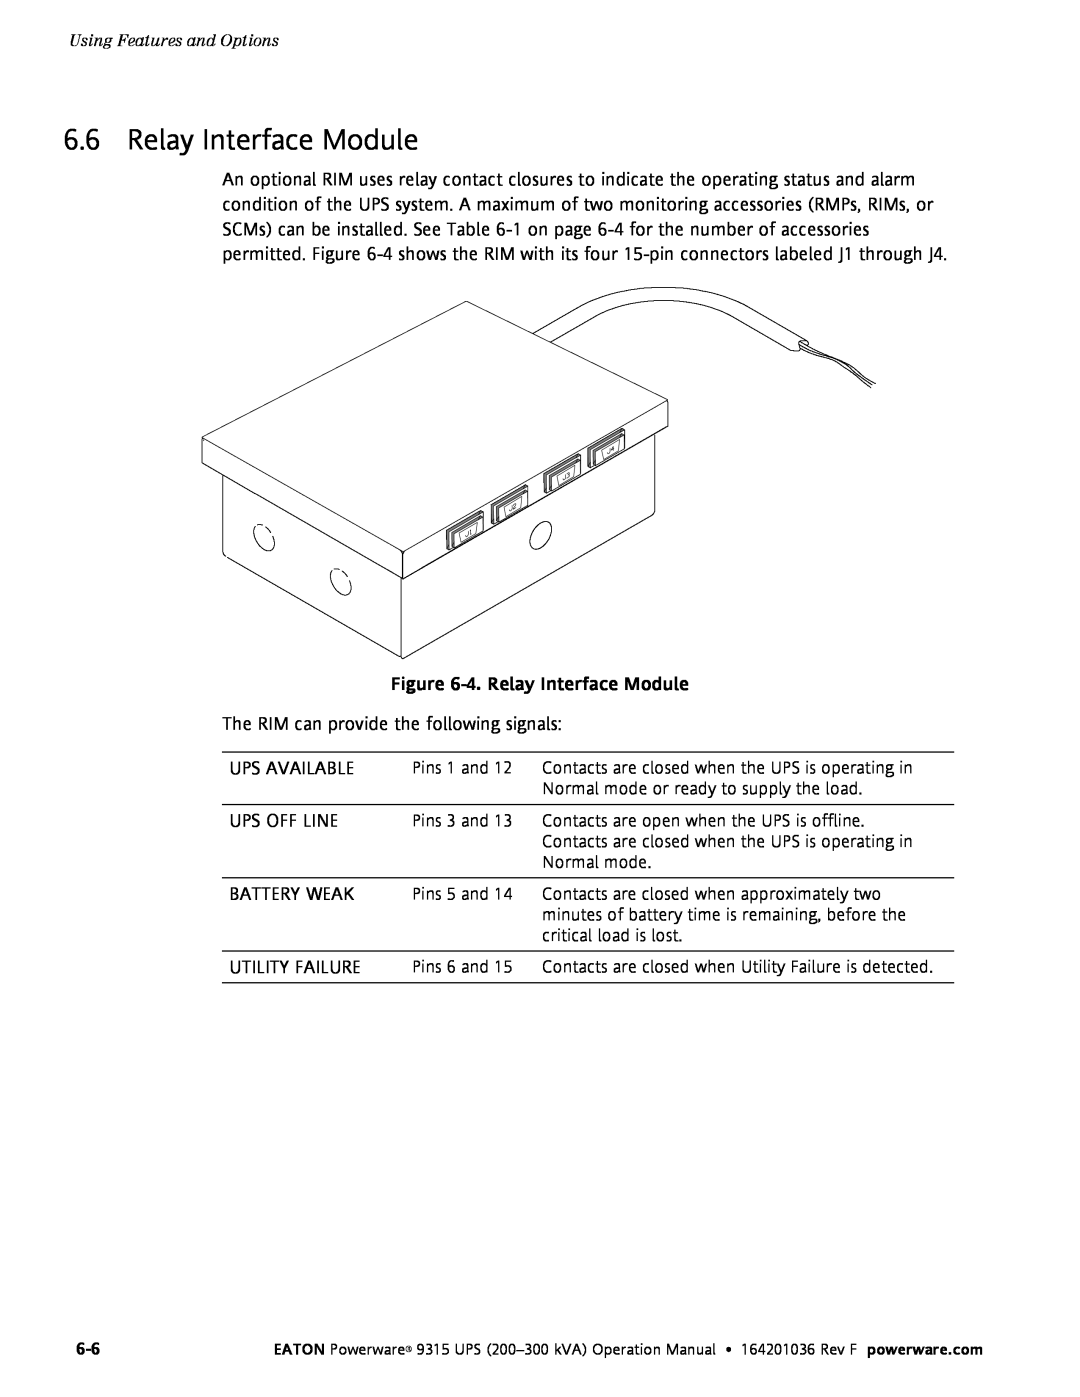 Eaton Electrical Powerware 9315 operation manual 4. Relay Interface Module 